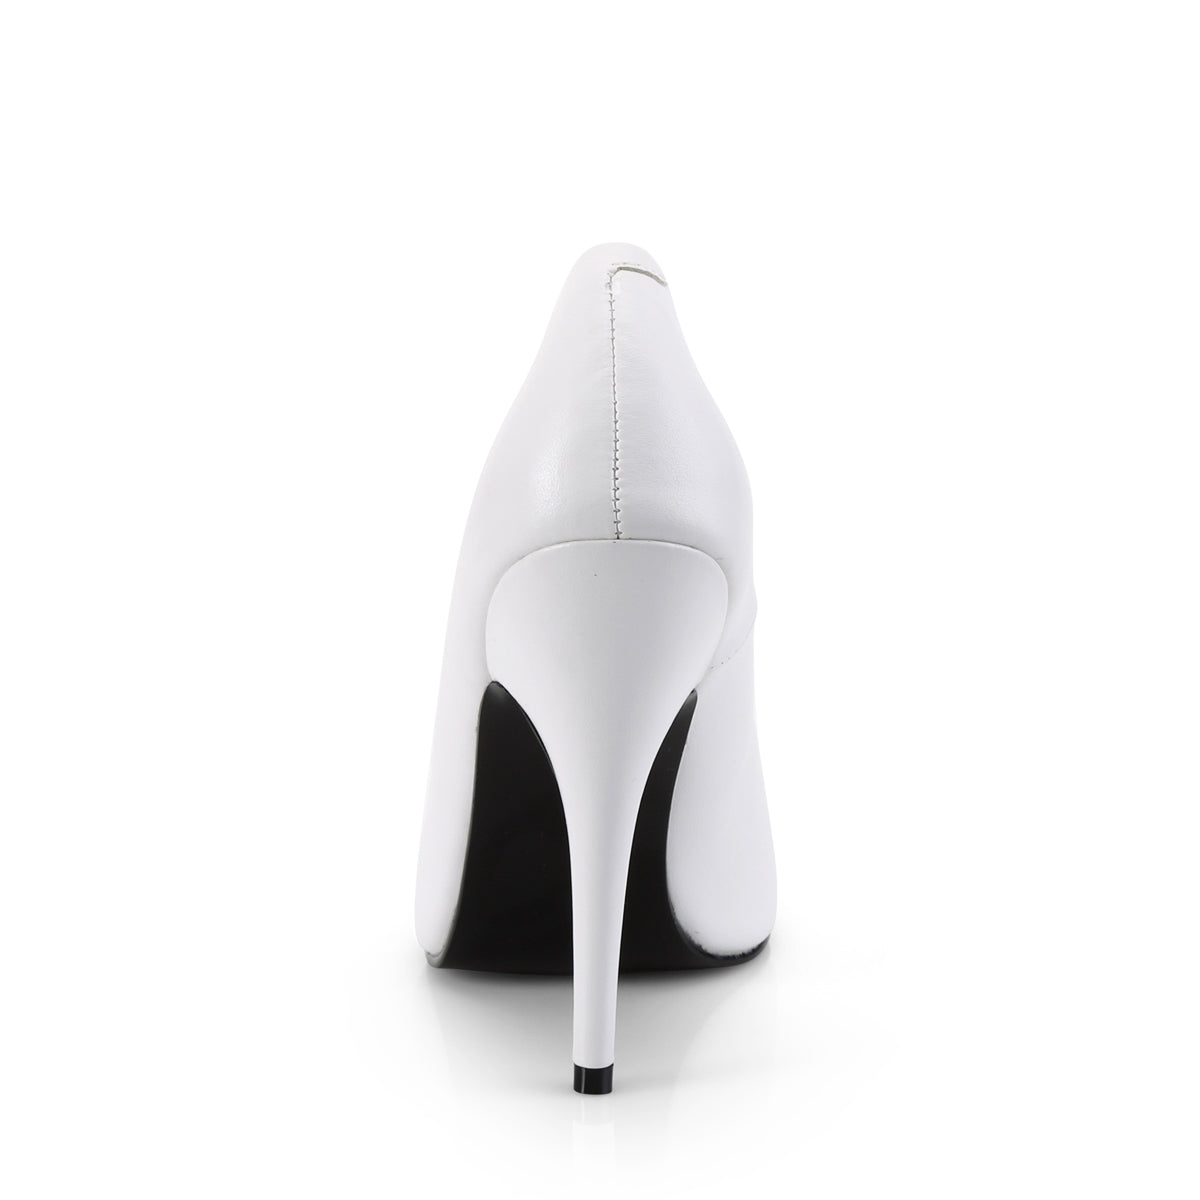 SEDUCE-420 White Leather High Heels